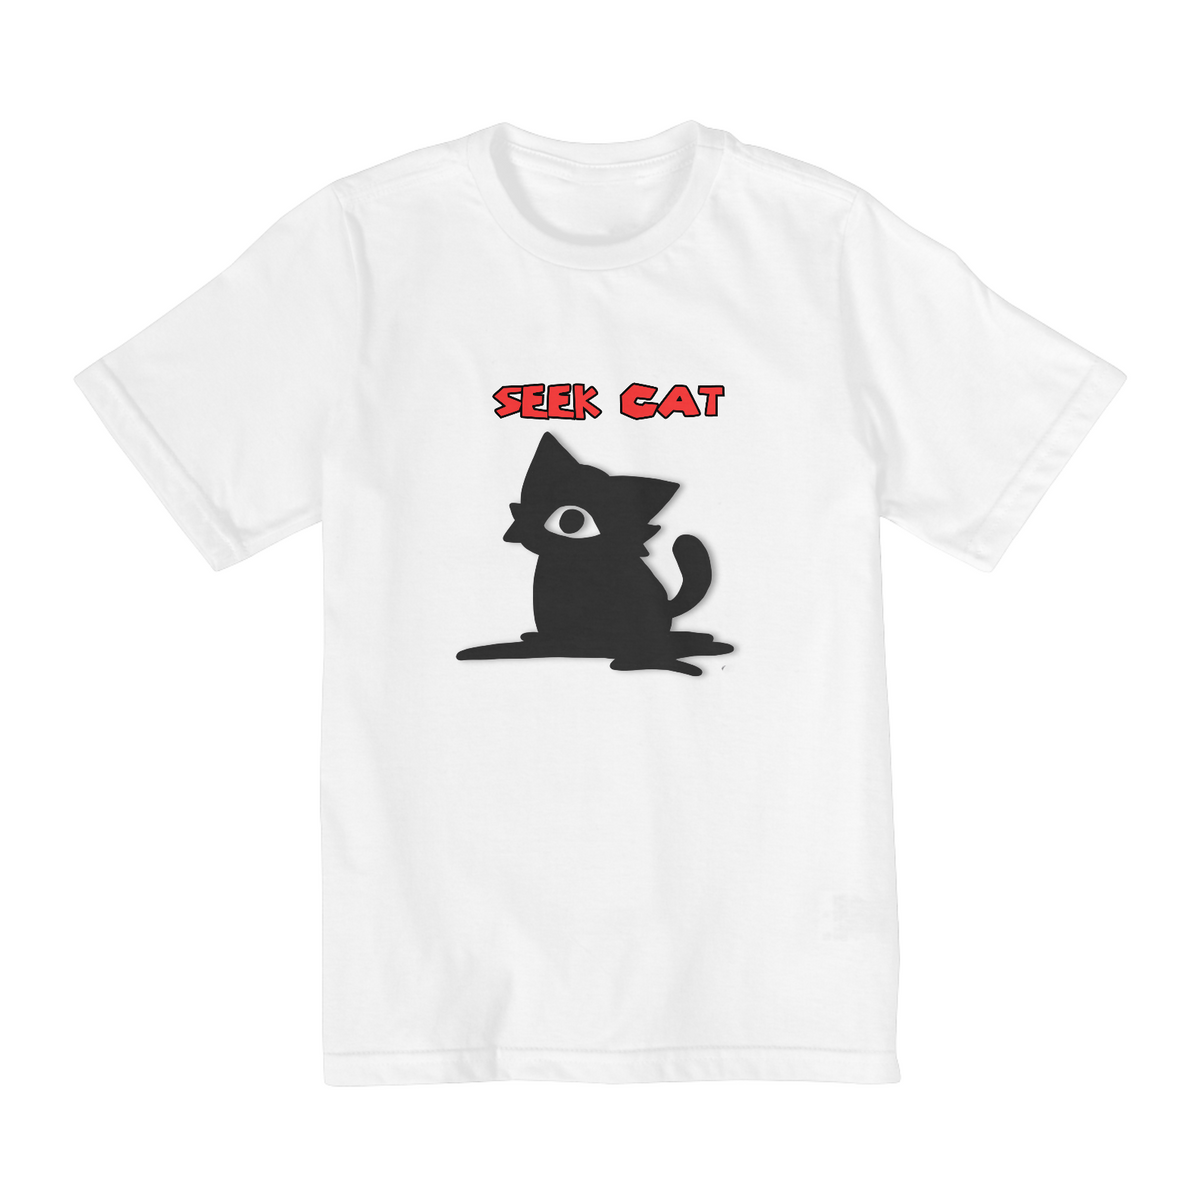 Nome do produto: Camiseta Infantil - Seek Cat